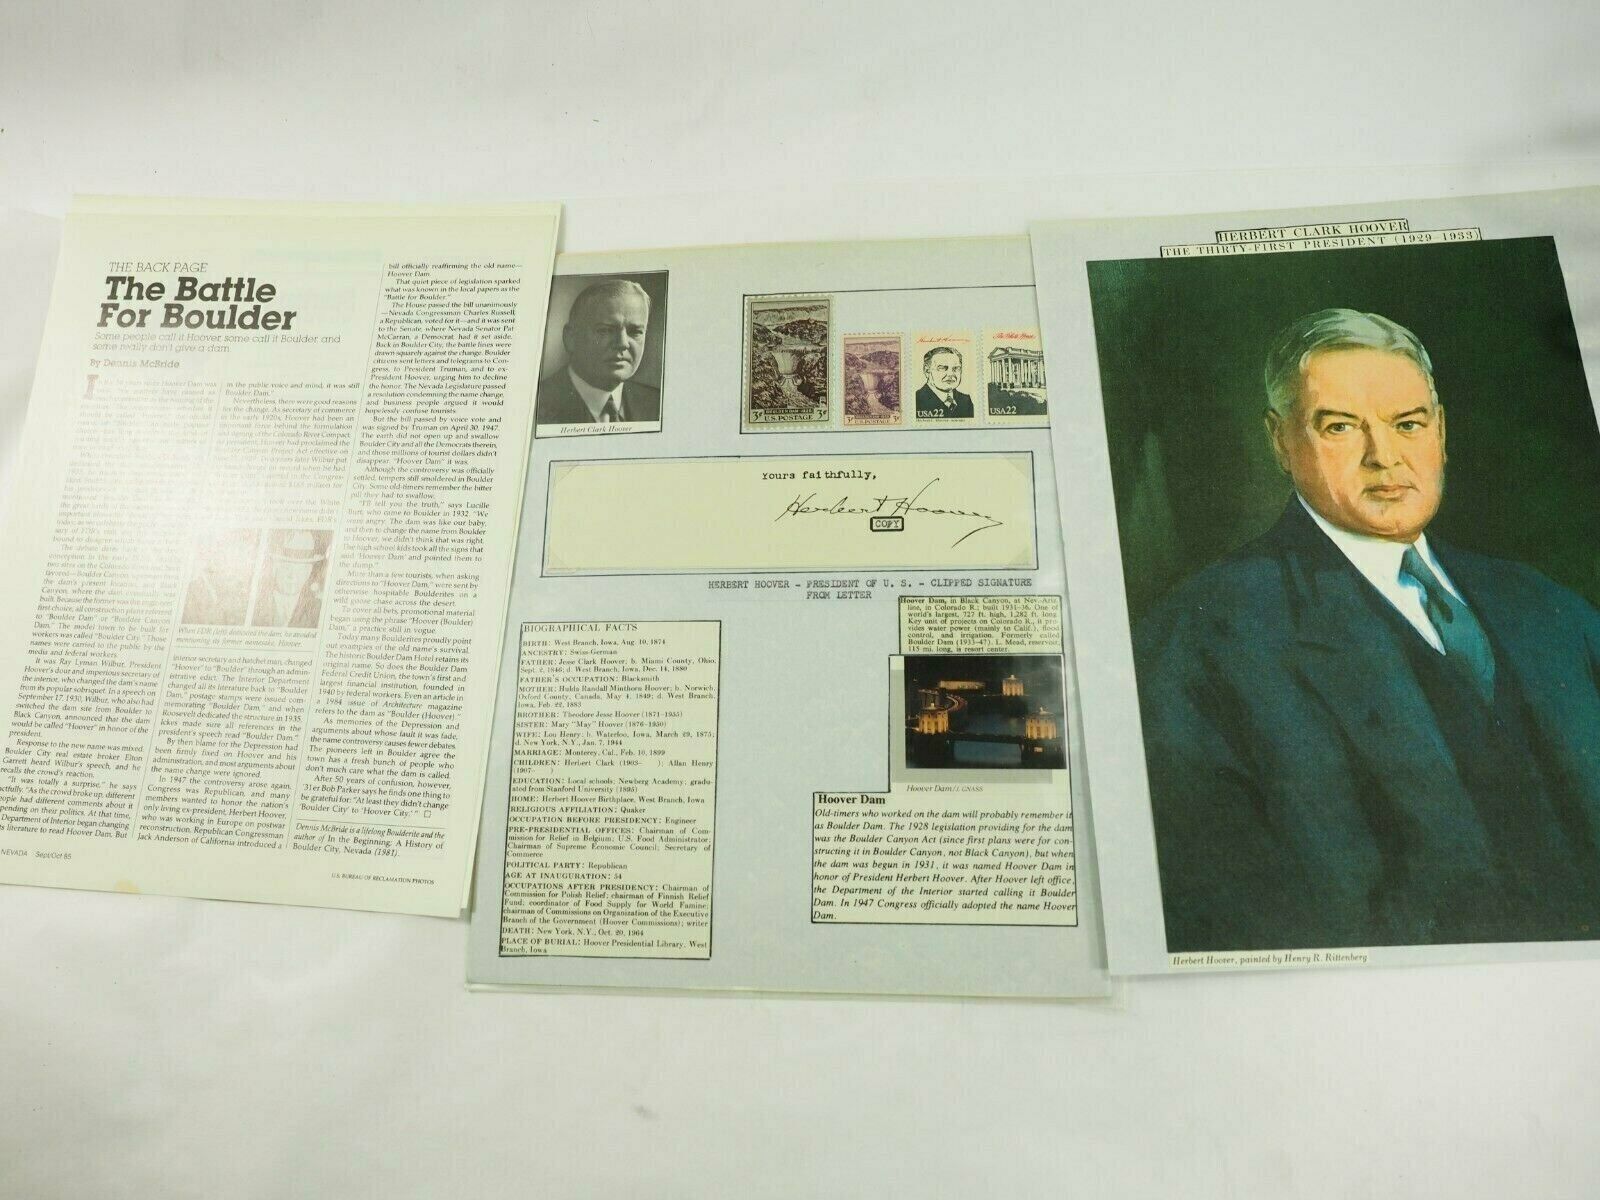 President Herbert Hover & Bolder Dam Stamps and Memorabilia